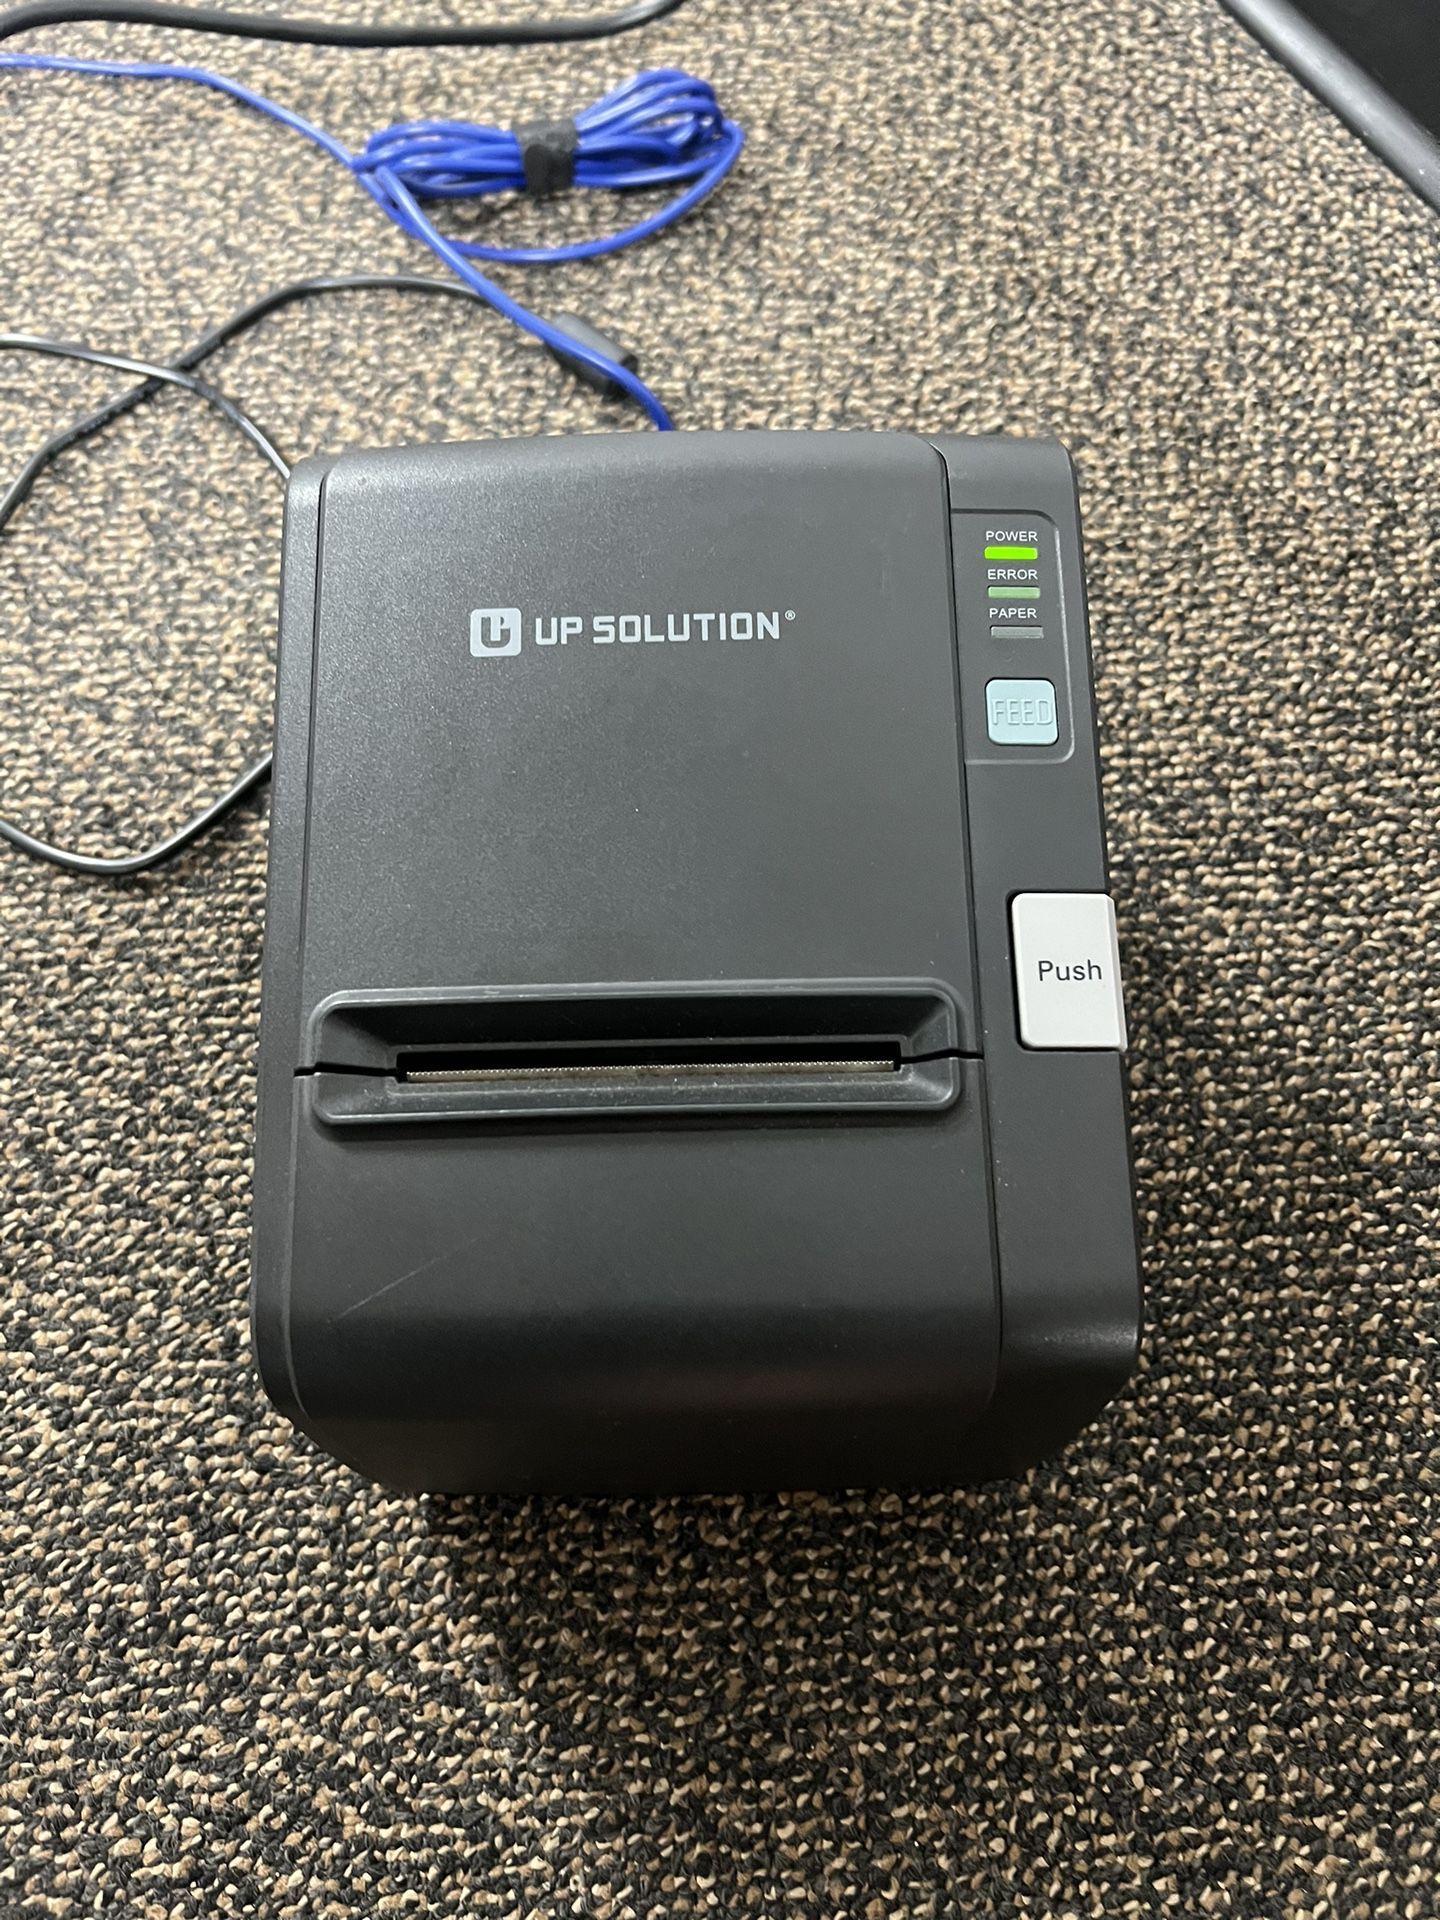 UpSolution Receipt Printer TP-680BS